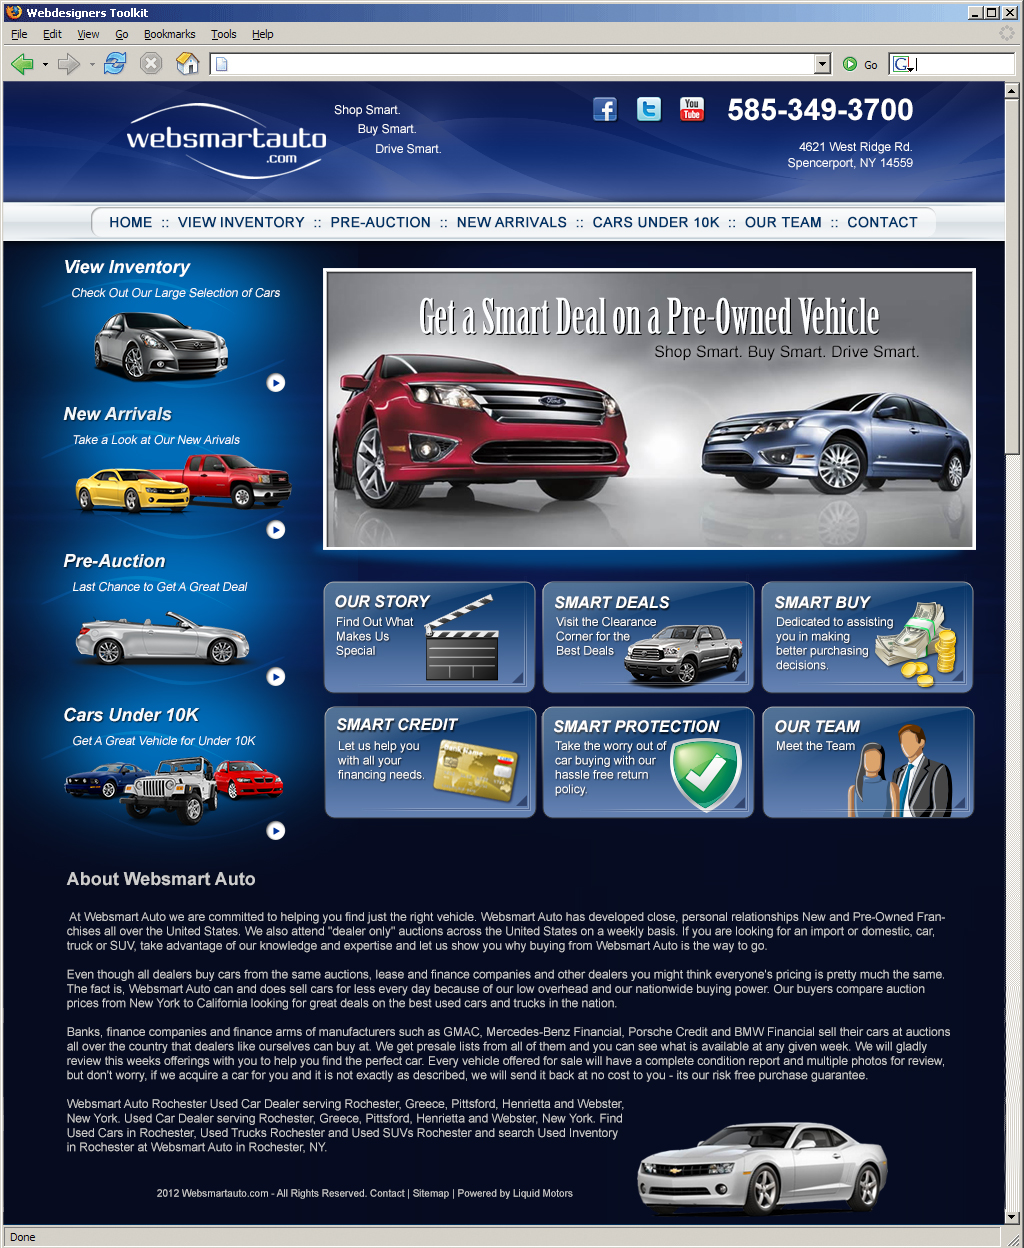 Studio-RM Portfolio - Websmart Auto Custom Website Design